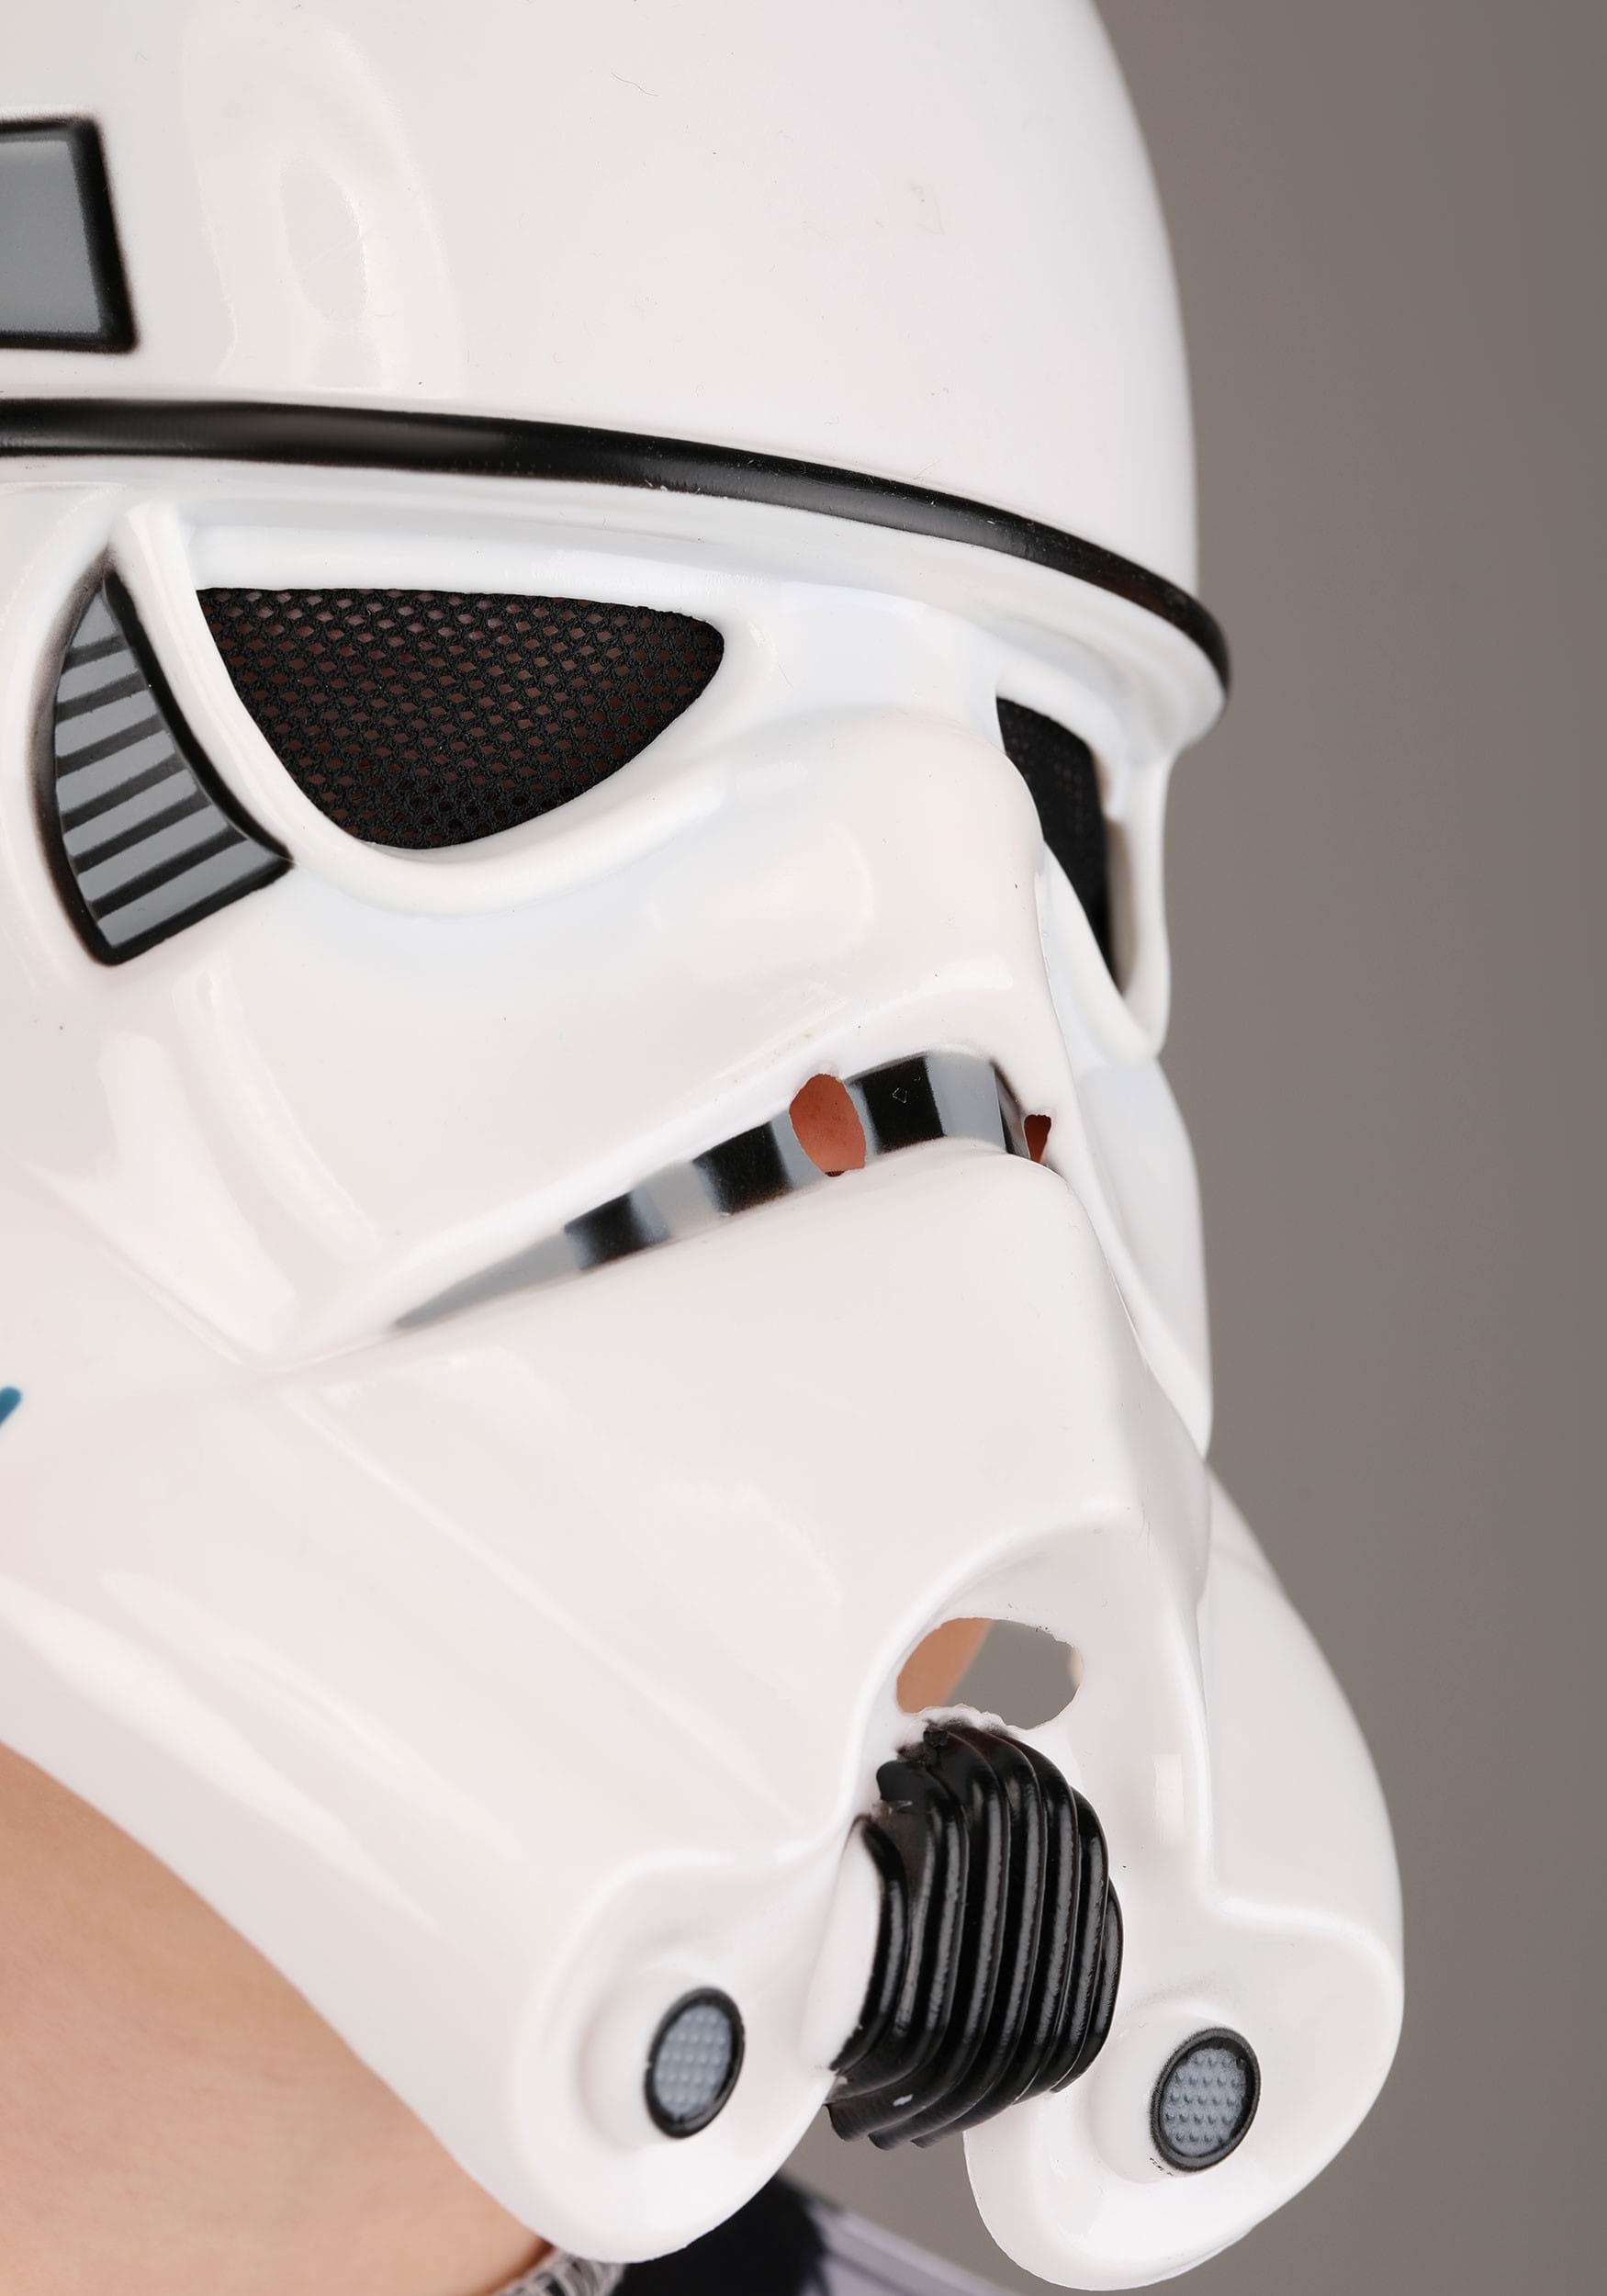 Imperial Stormtrooper Kid's Mask